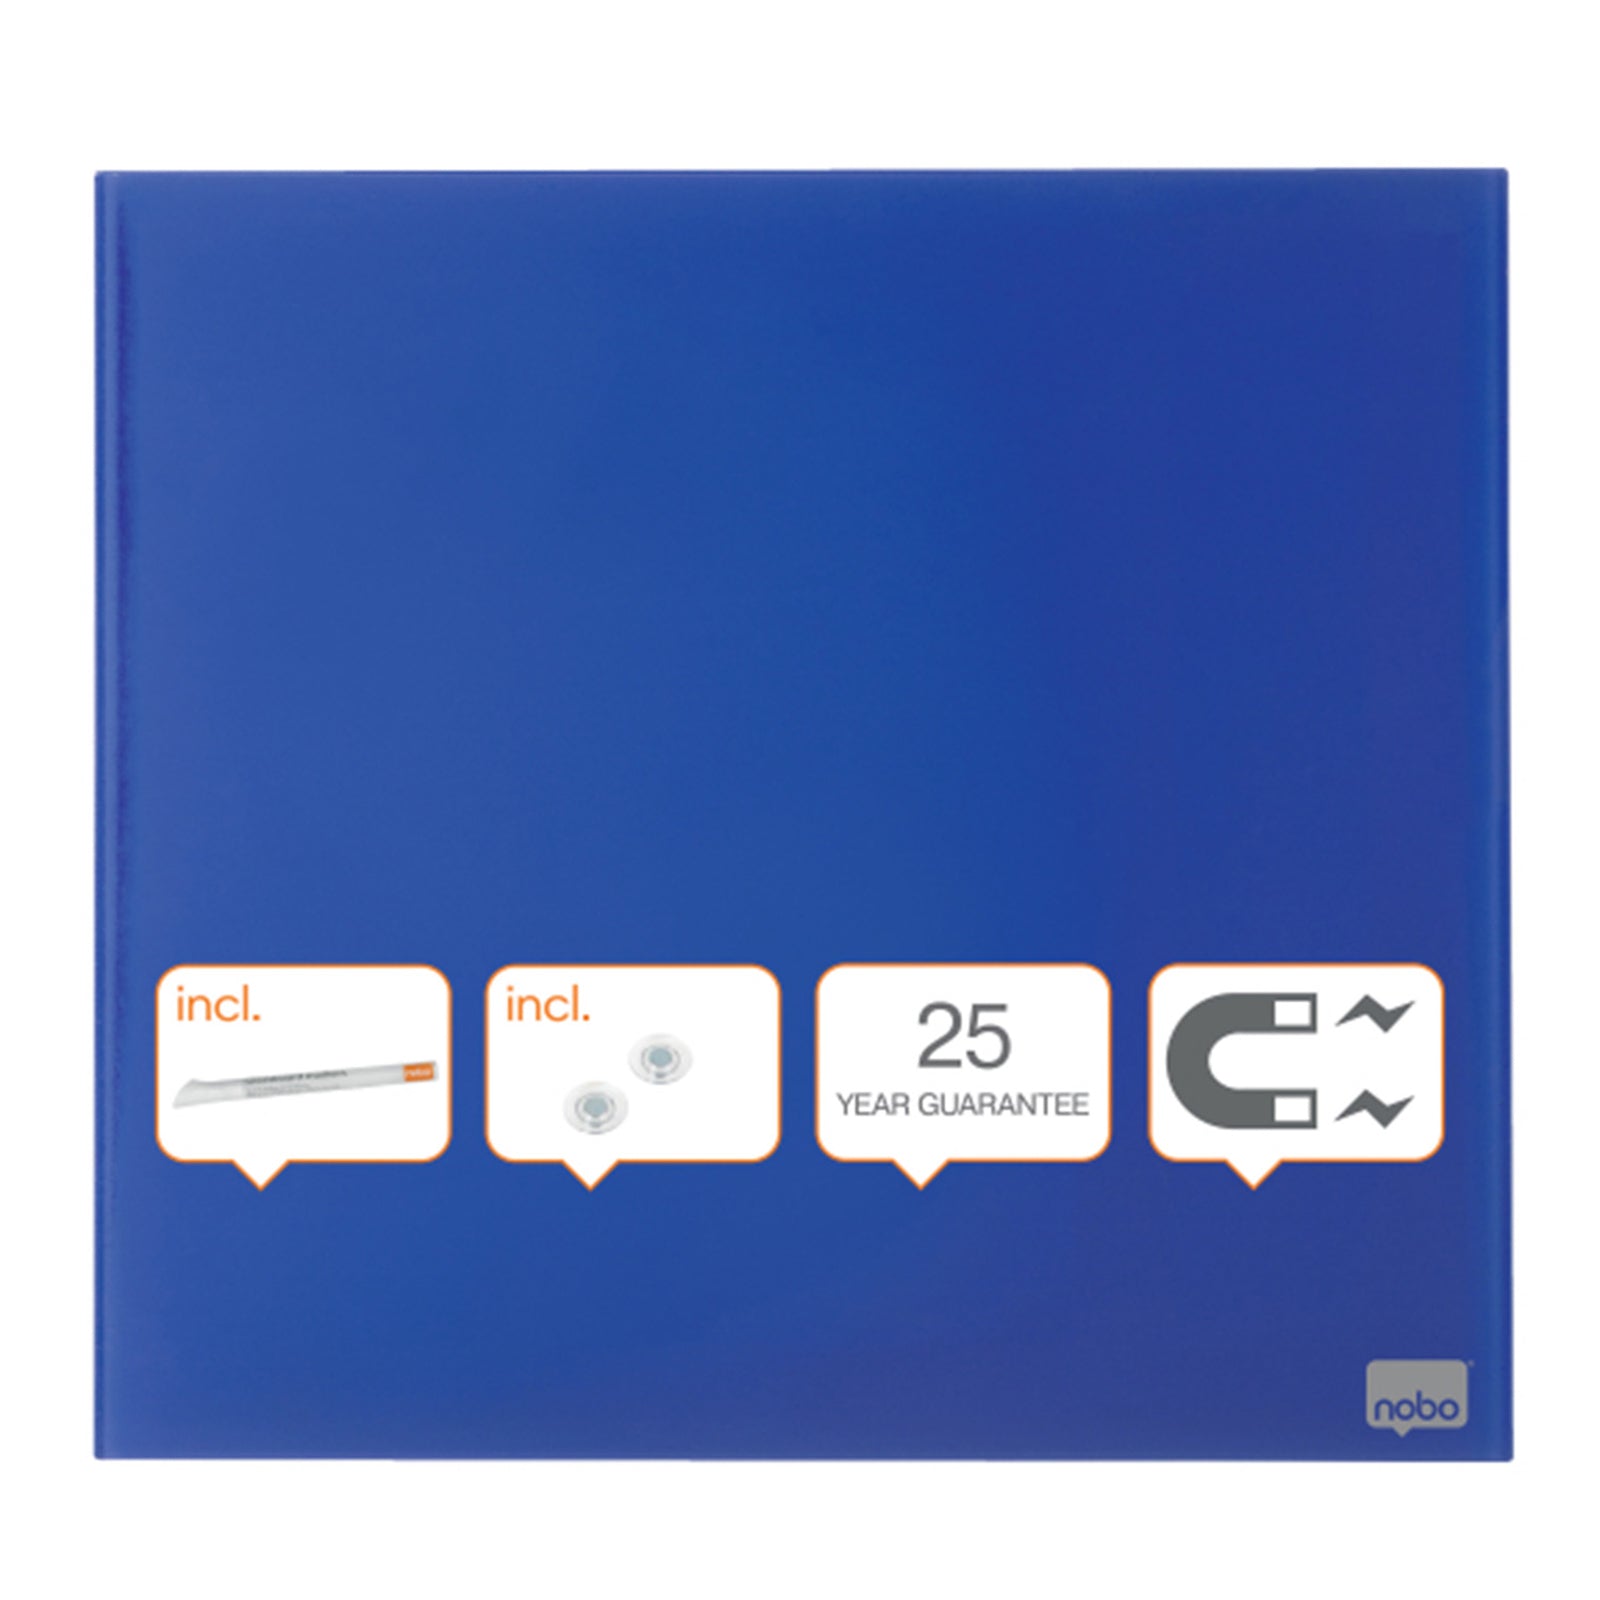 Nobo Glas-Whiteboard | Magnetisch | Inklusive Boardmarker & Magnete